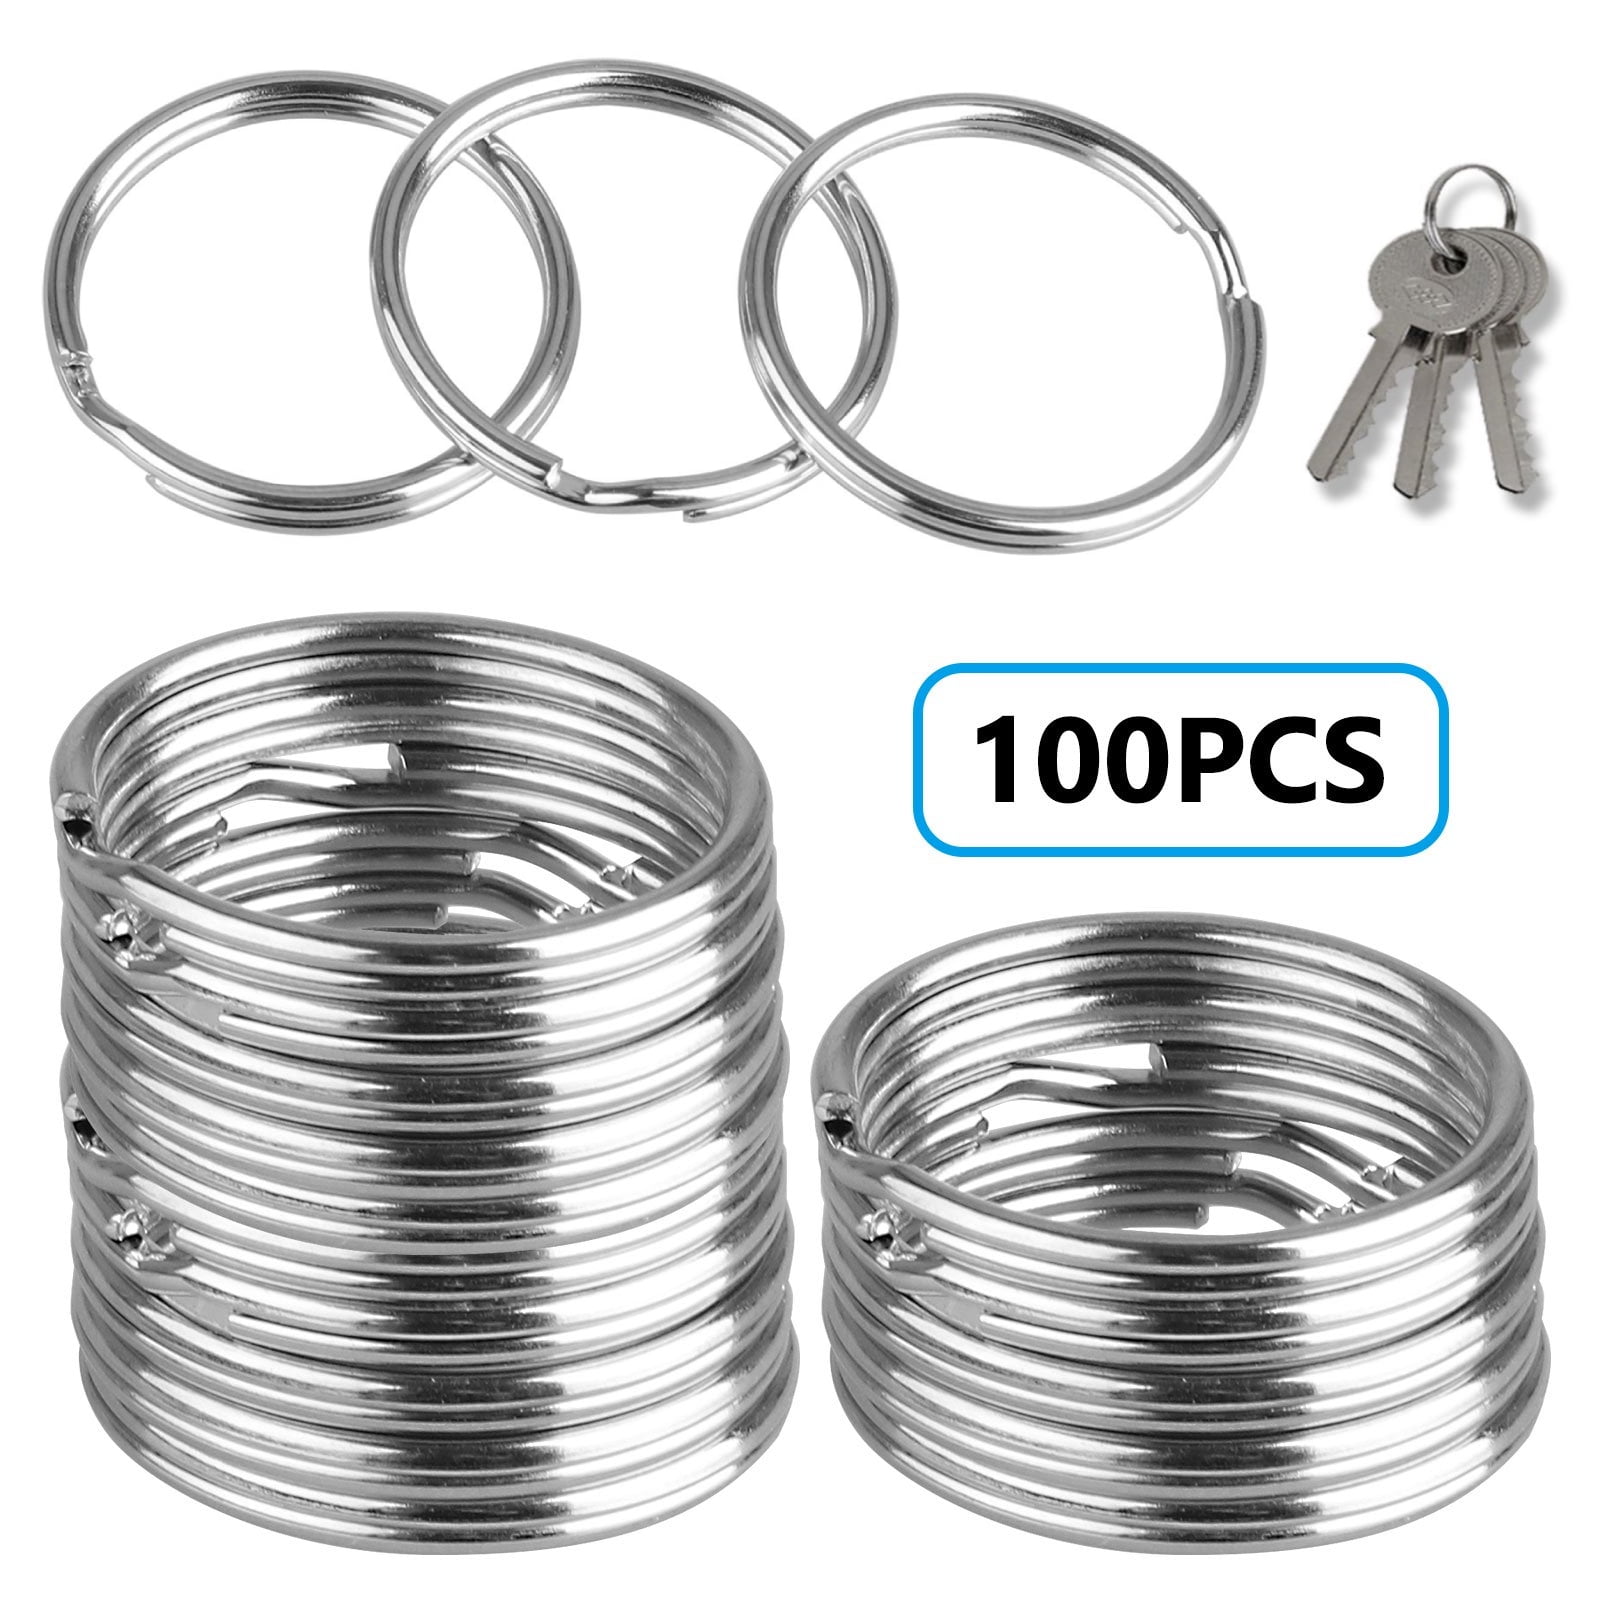 100pcs Split Rings Small Key Rings Bulk Key Chain Rings for Key Organization 